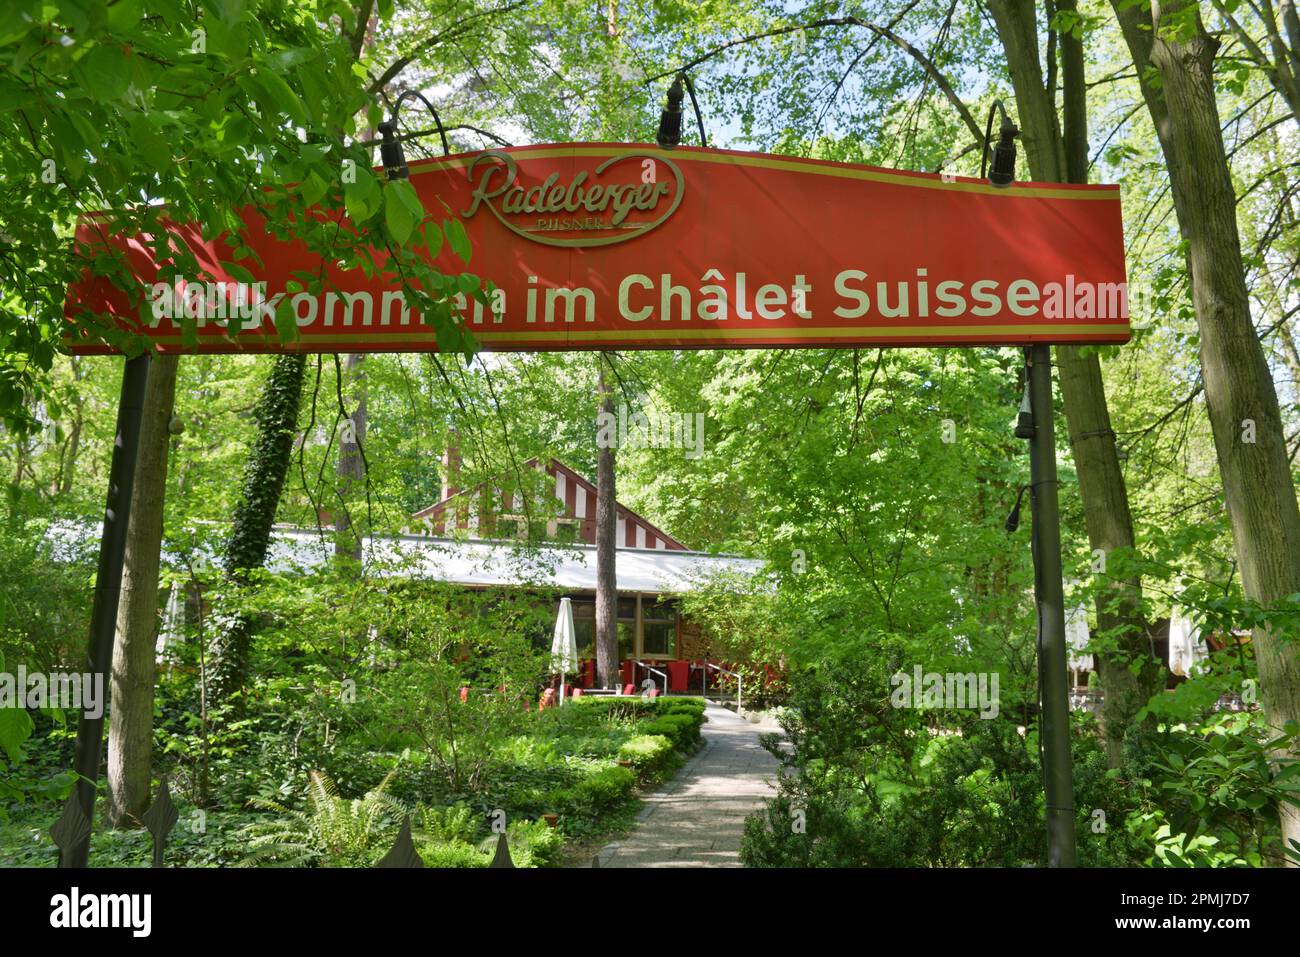 Restaurant, Chalet Suisse, Grunewald, Berlin, Germany Stock Photo